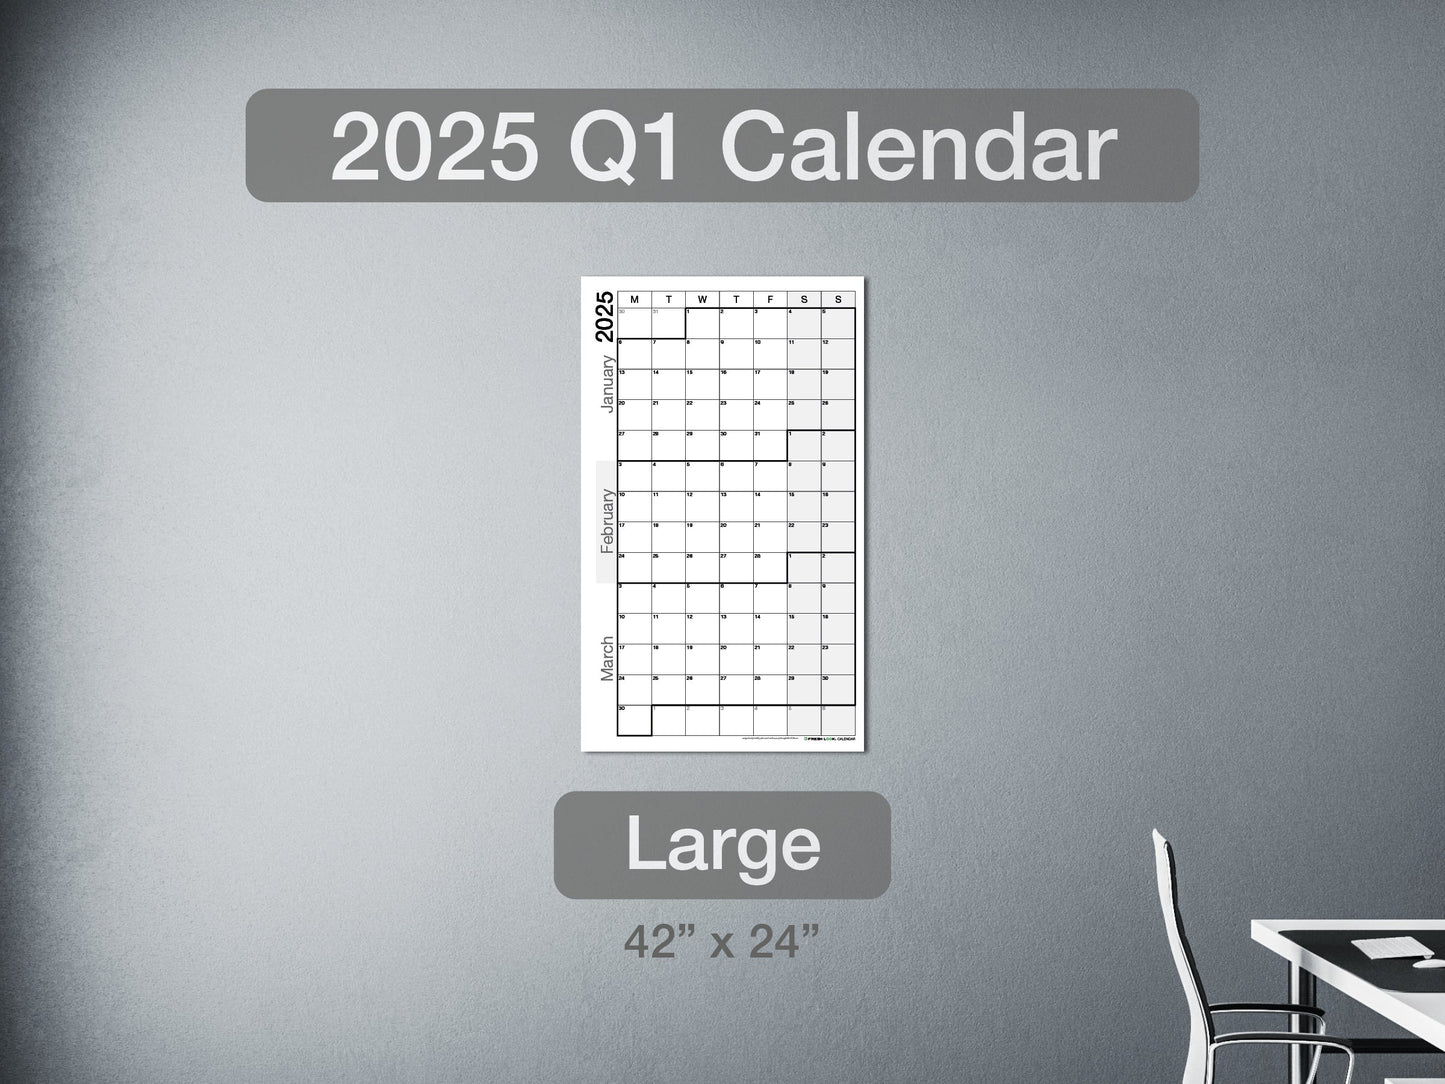 2025 Q1 Calendar Large